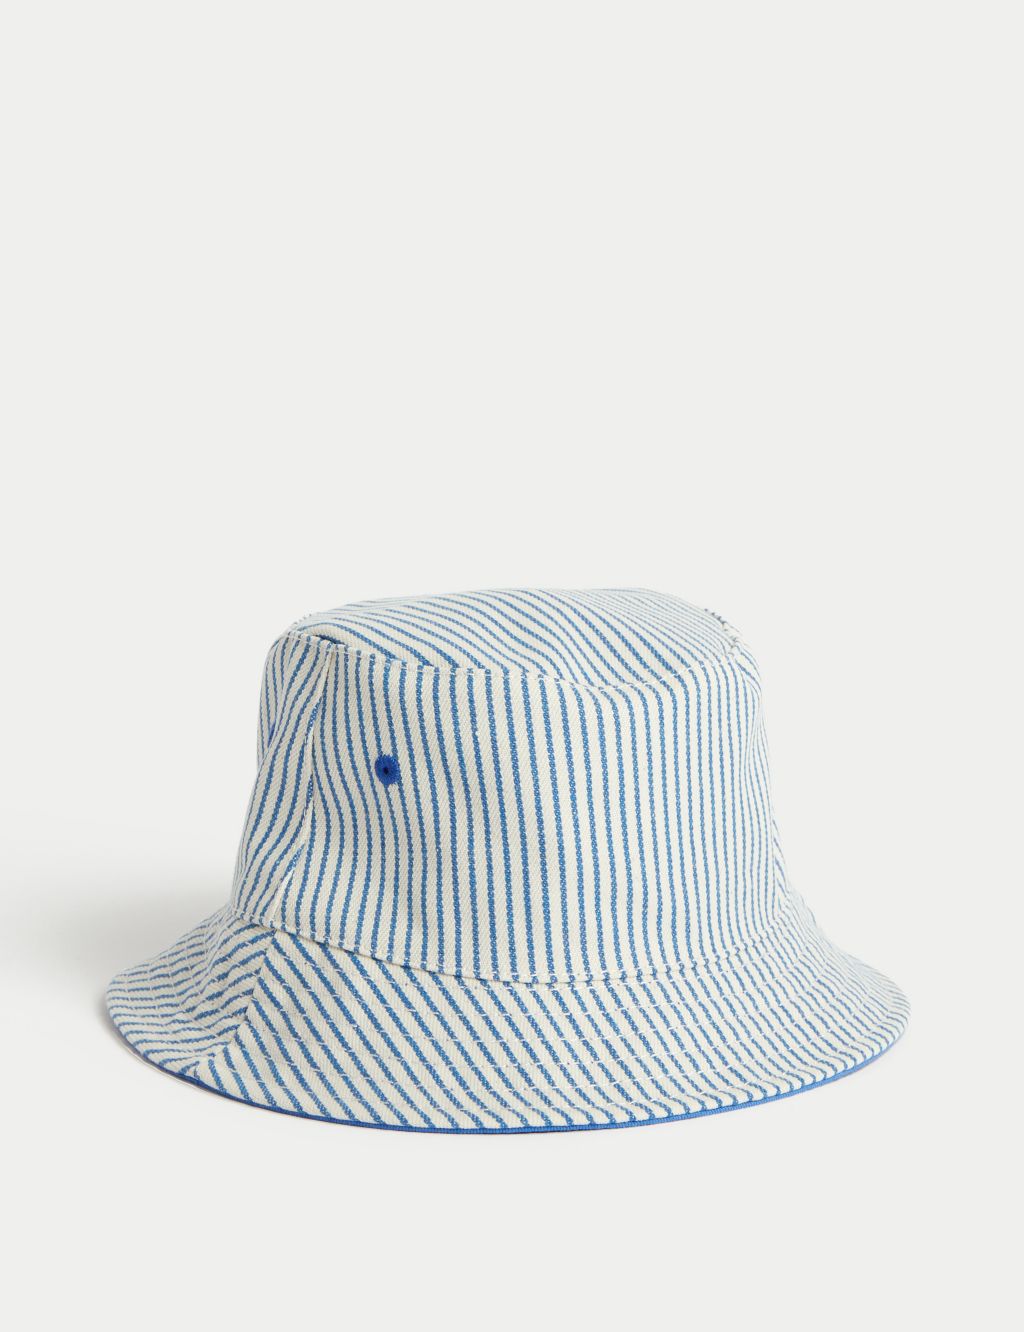 Kids' Pure Cotton Striped Sun Hat (1-6 Yrs) image 2